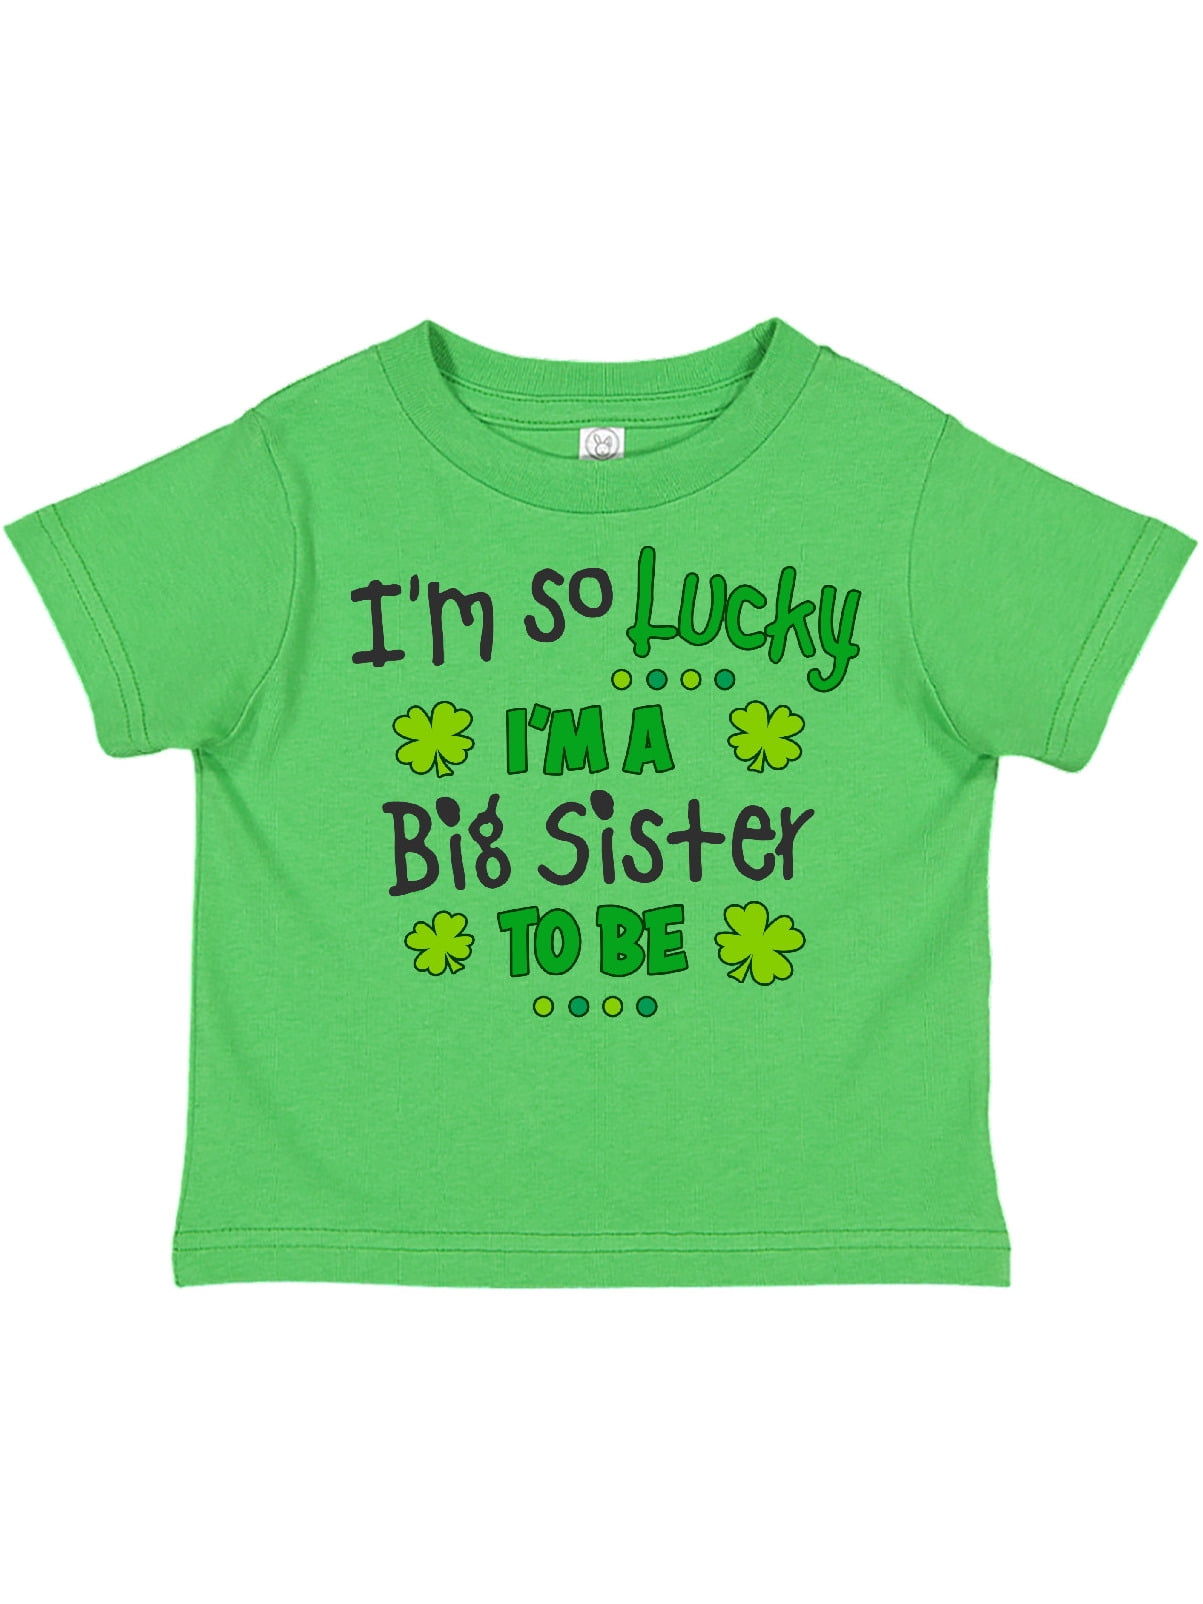 inktastic Big Sister Toddler T-Shirt 